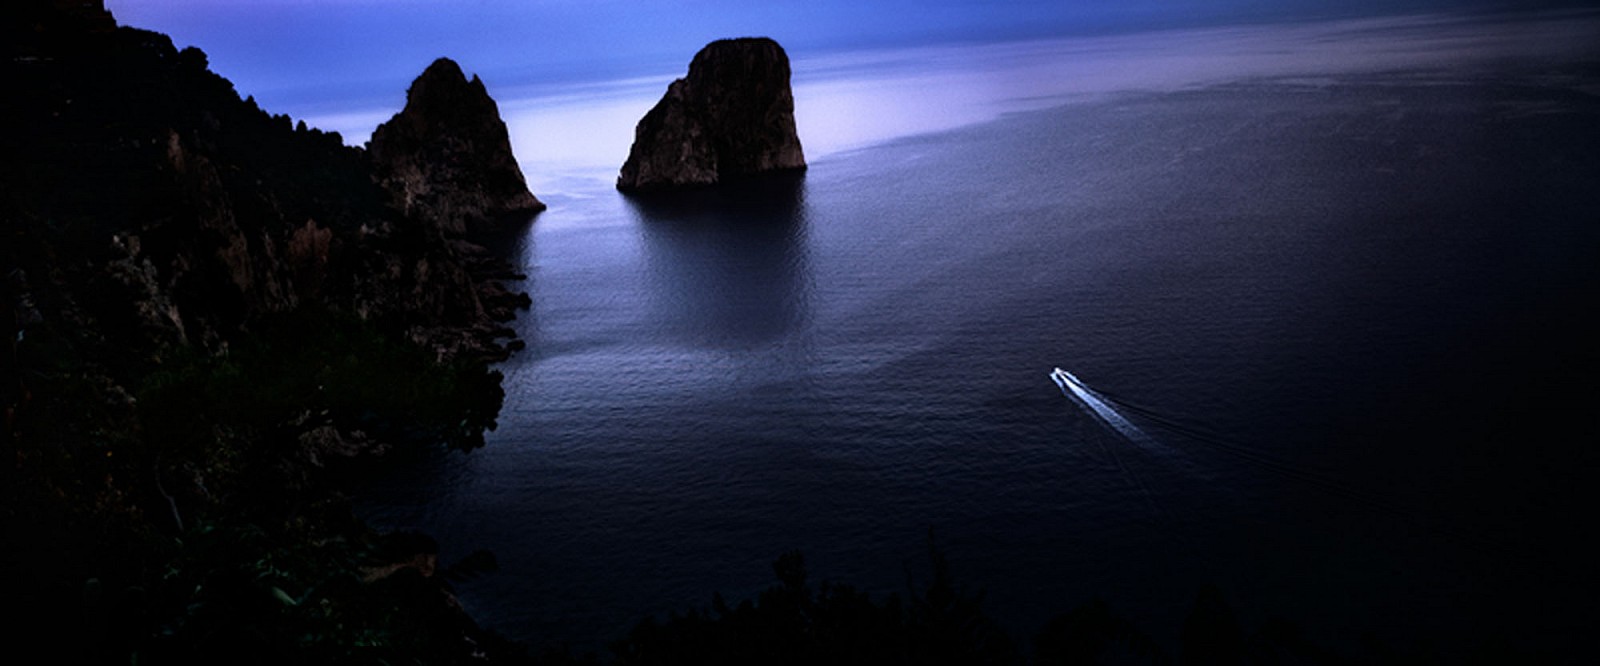 David Drebin, Capri Dreams, 2012
Digital C Print, 20 x 48 inches; 30 x 72 inches; 40 x 96 inches